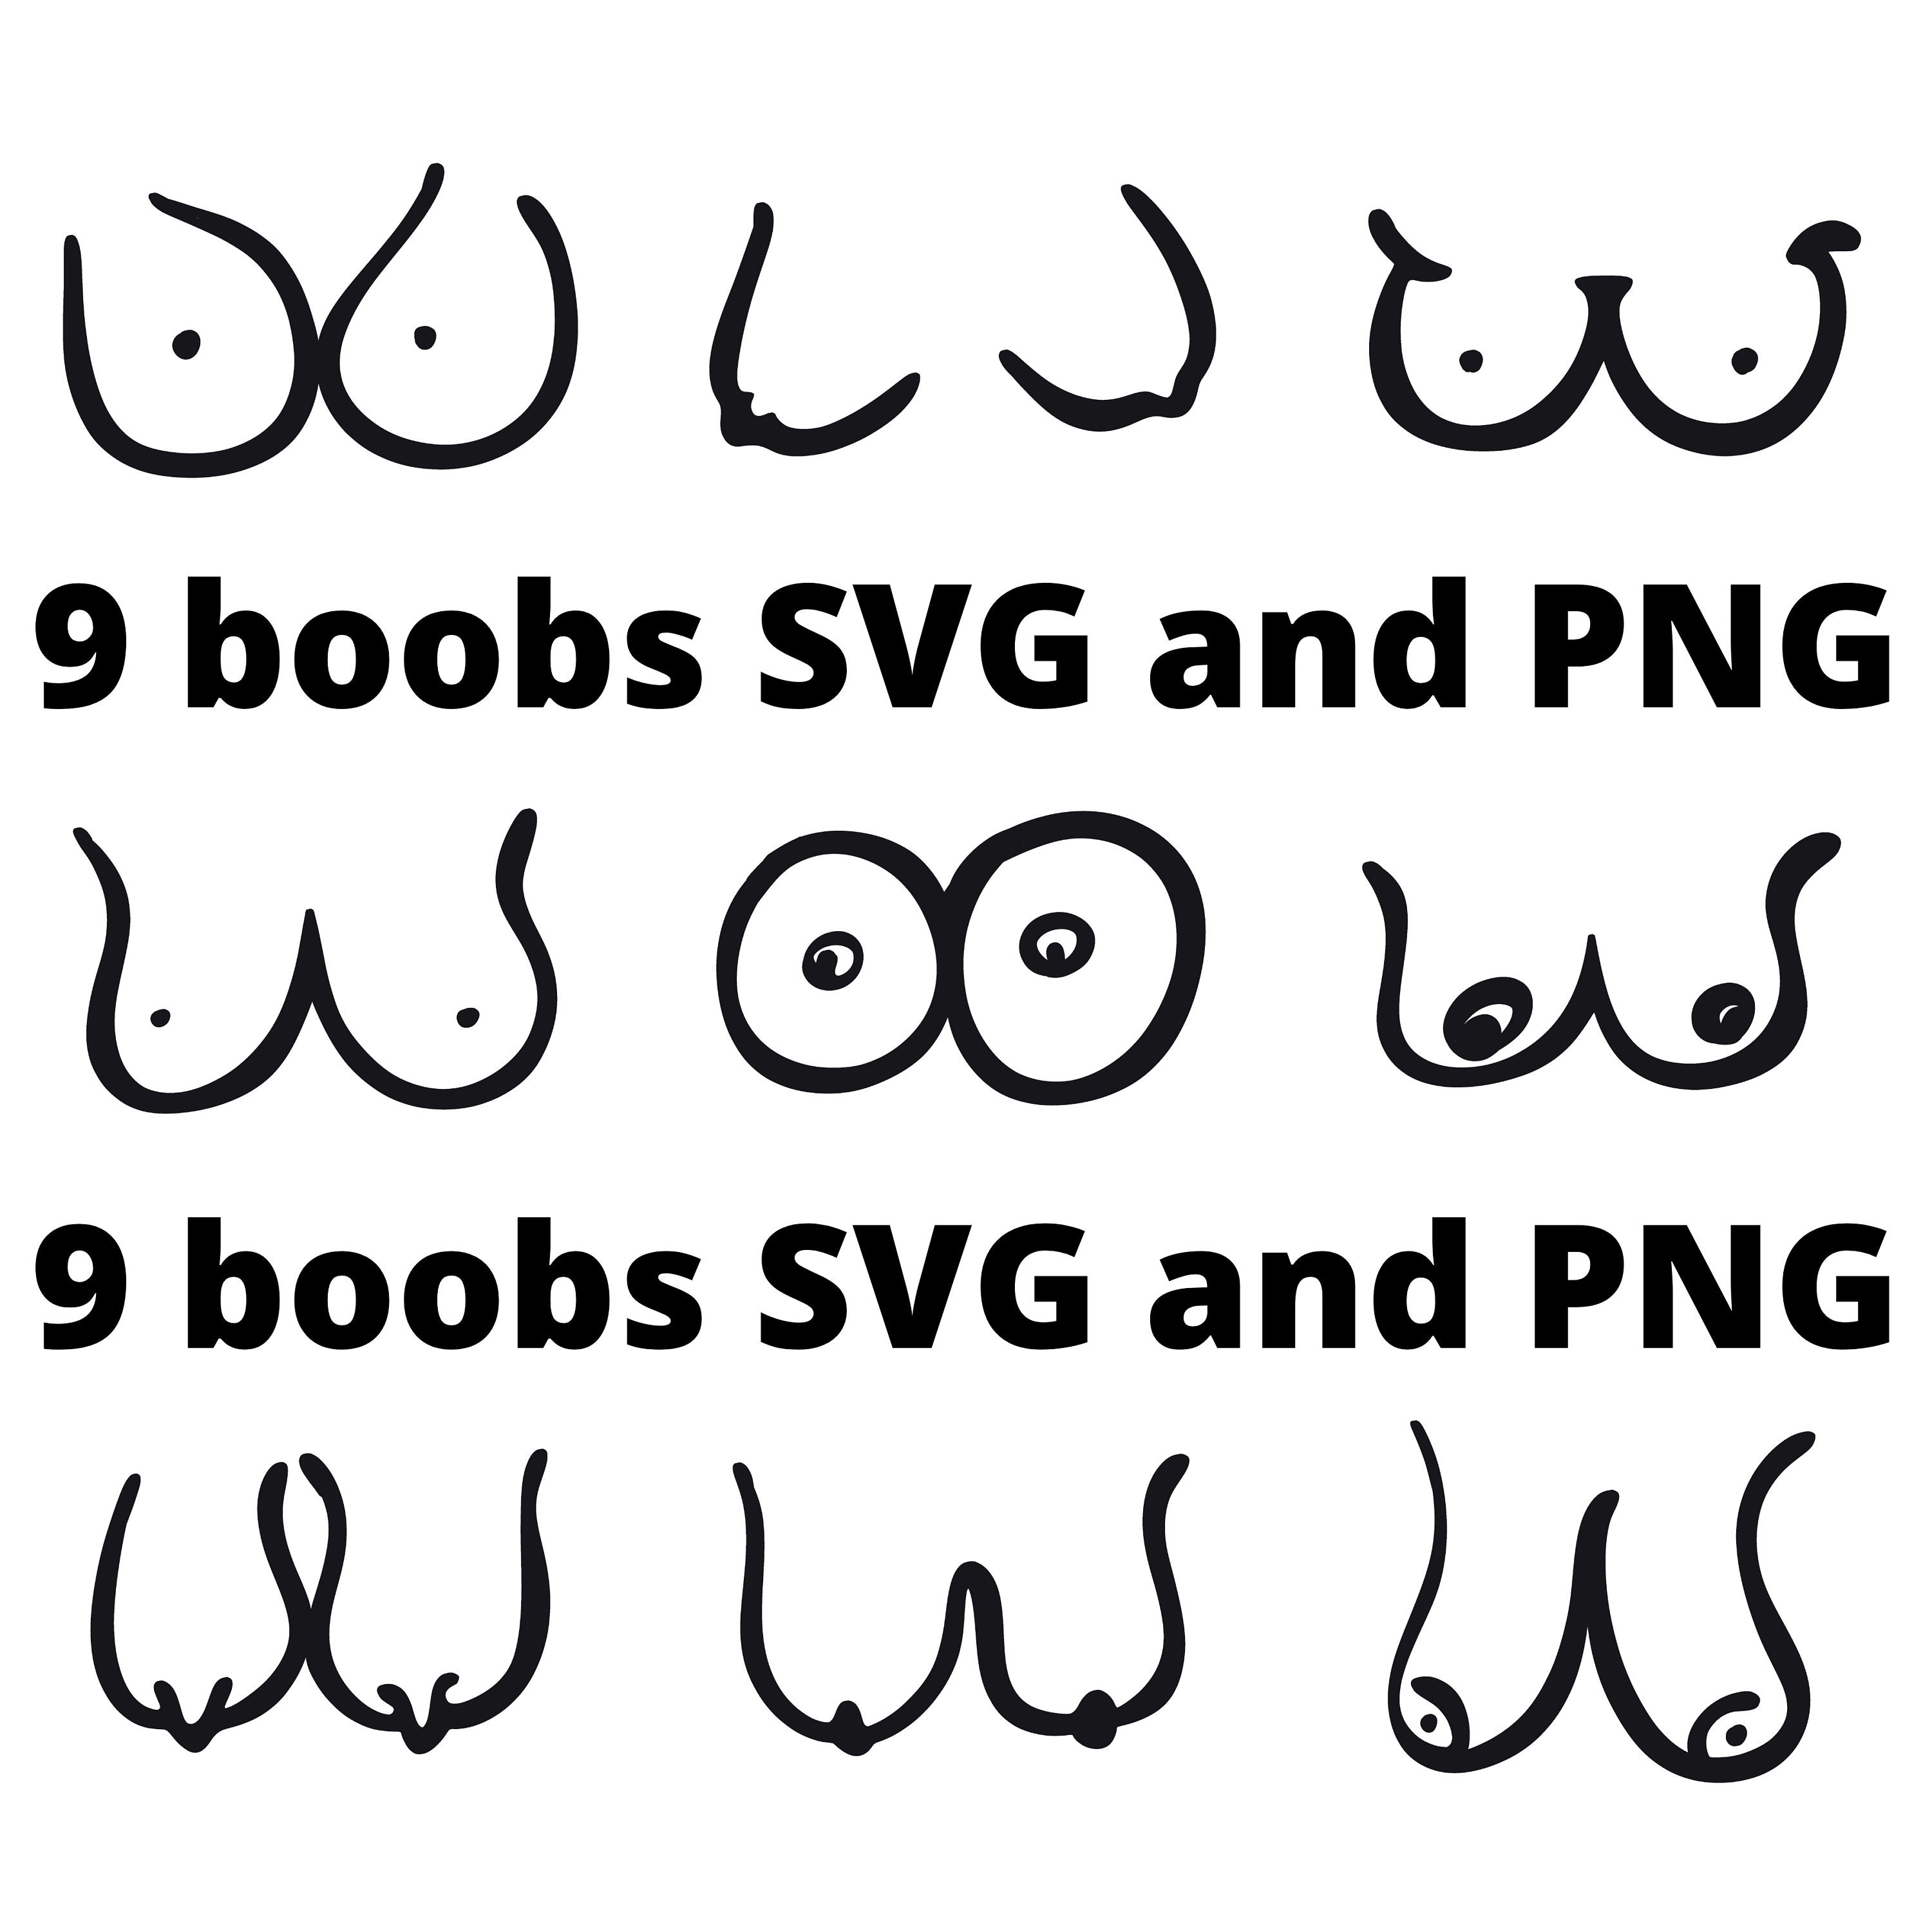 9 boobs clip art PNG & SVG bundle